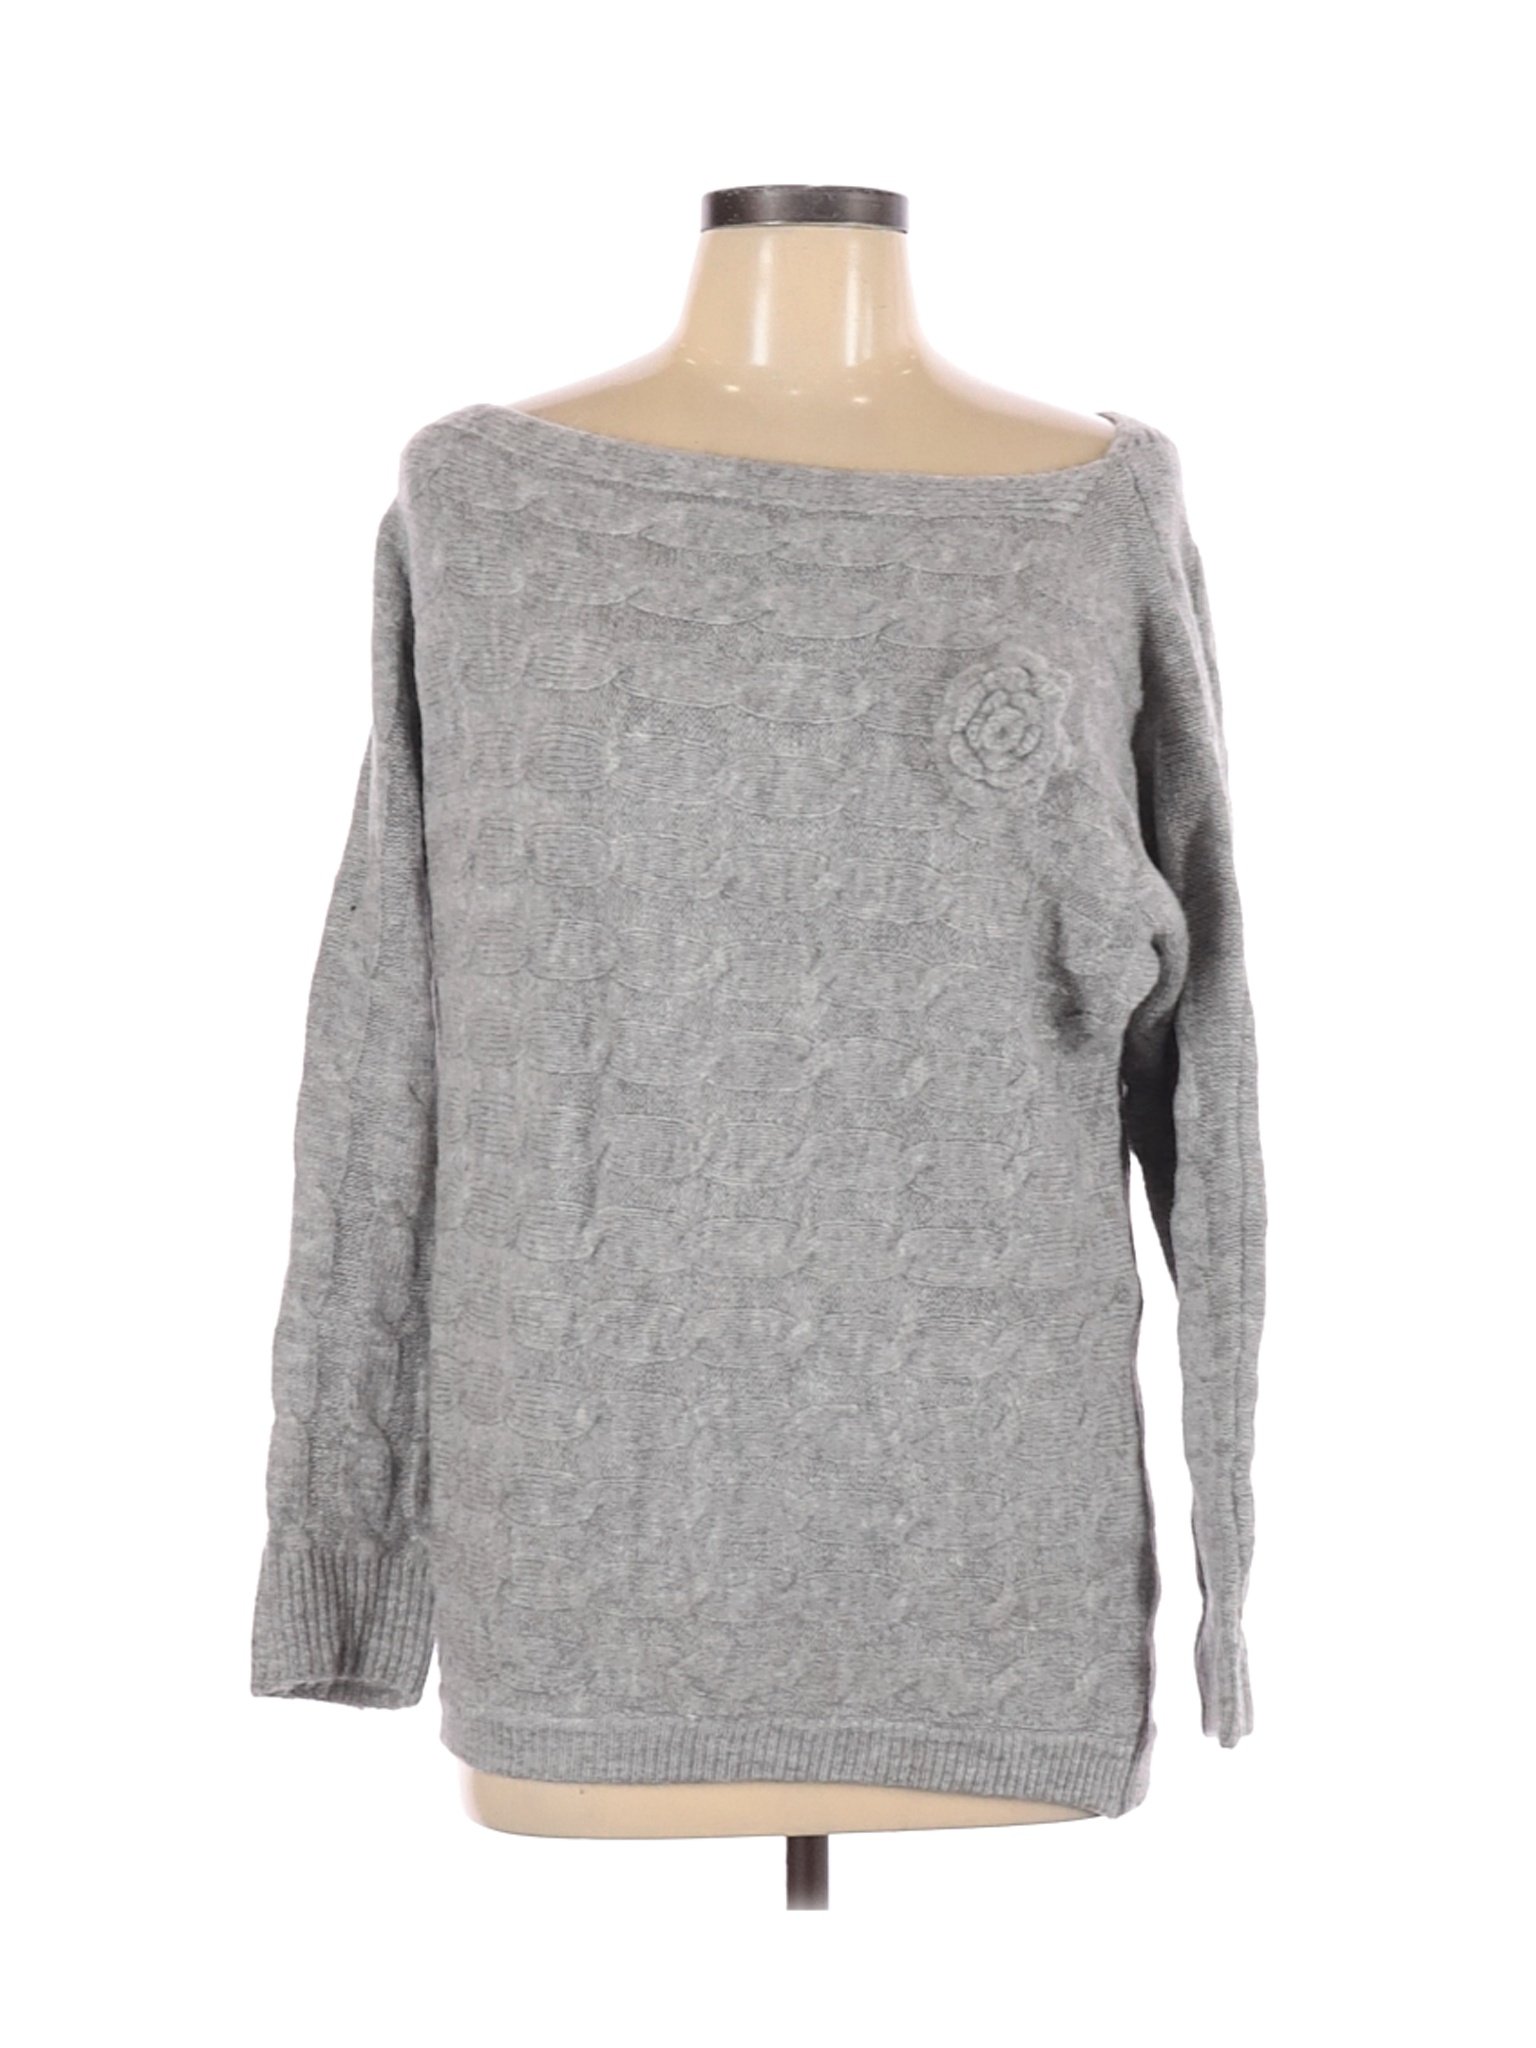 NWT Military Hippie Women Gray Pullover Sweater 1X Plus | eBay